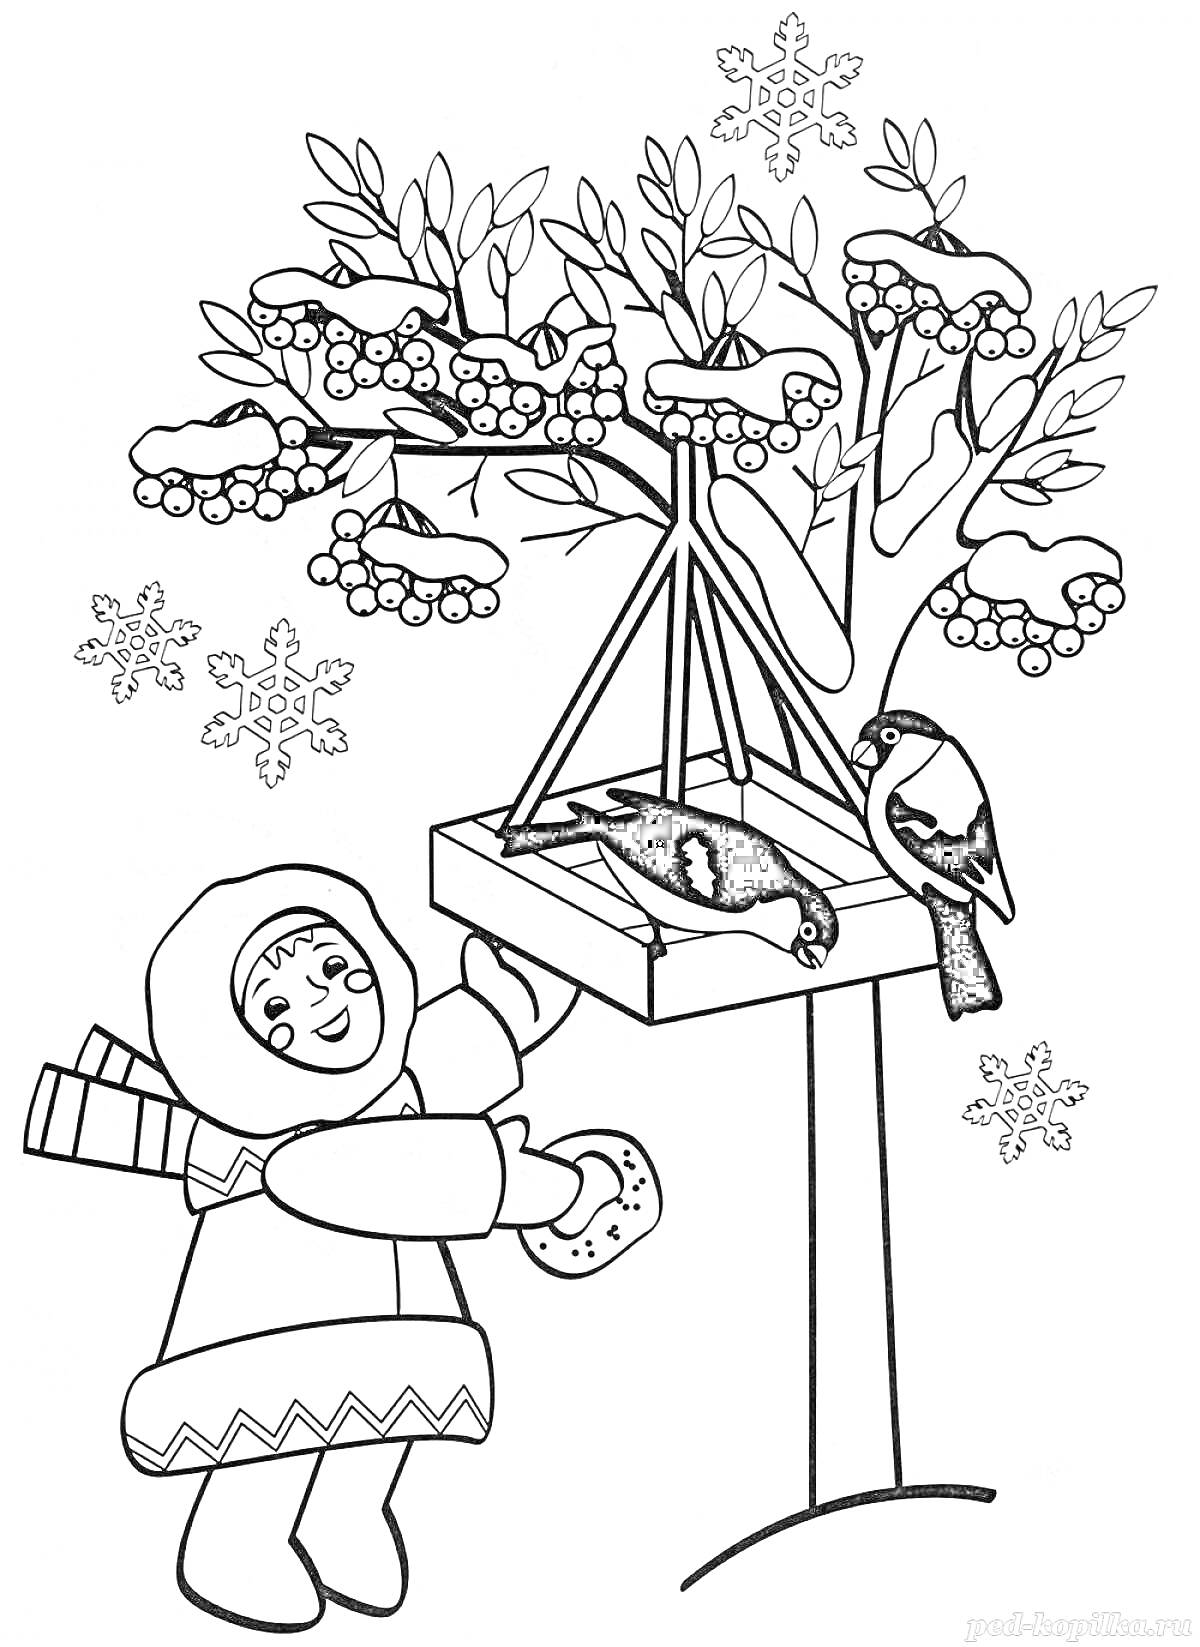 Раскраска Ребенок кормит птиц хлебом, деревья со снегом, кормушка с двумя птицами, снежинки